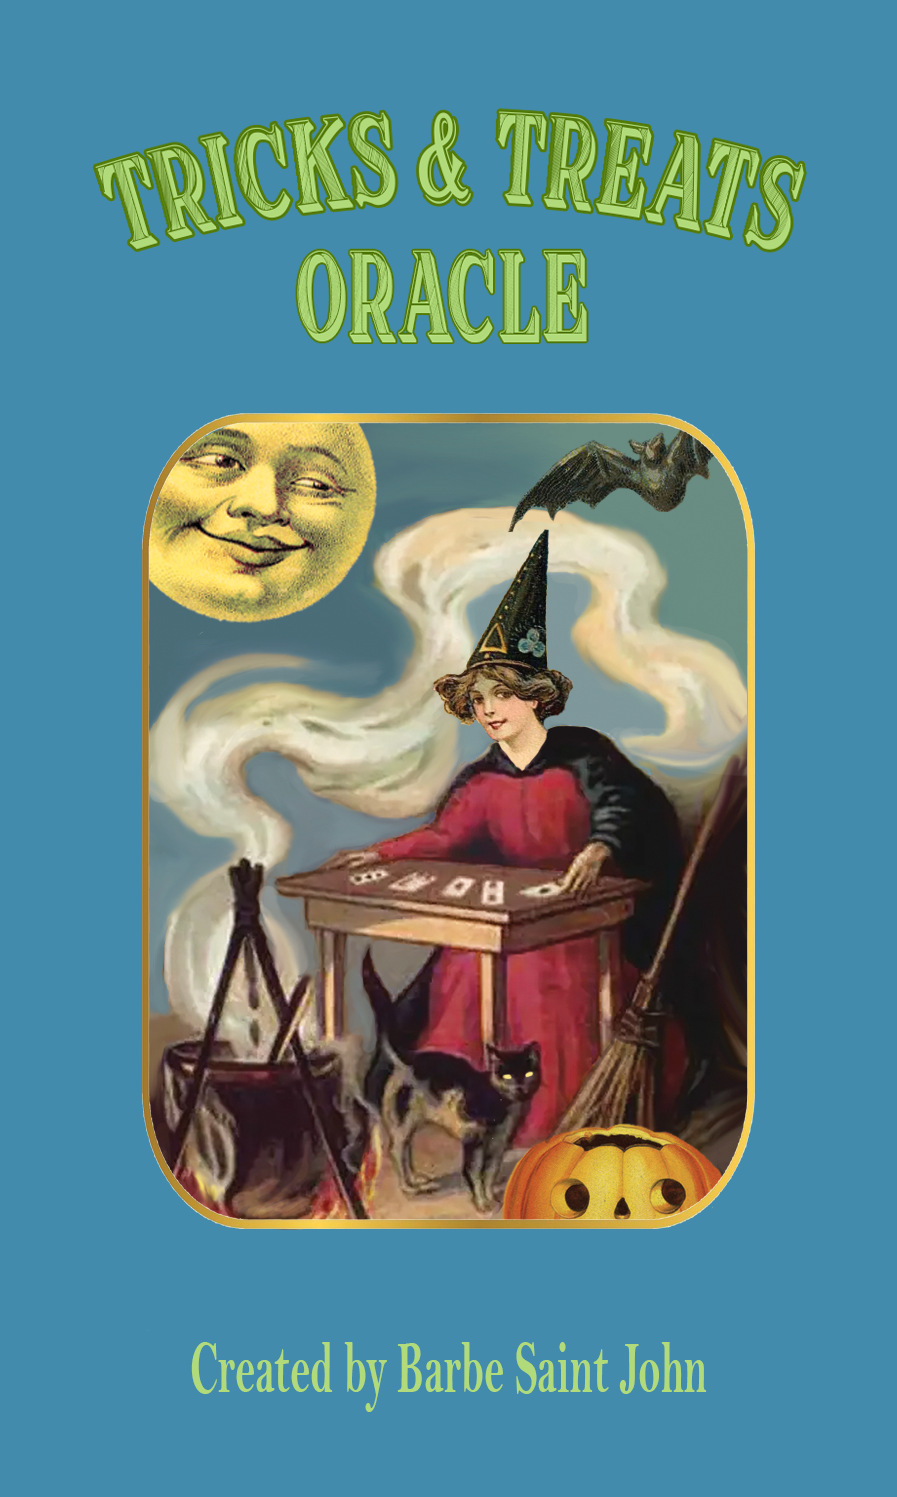 Tricks & Treats Vintage Halloween Oracle Deck from Barbe Saint John